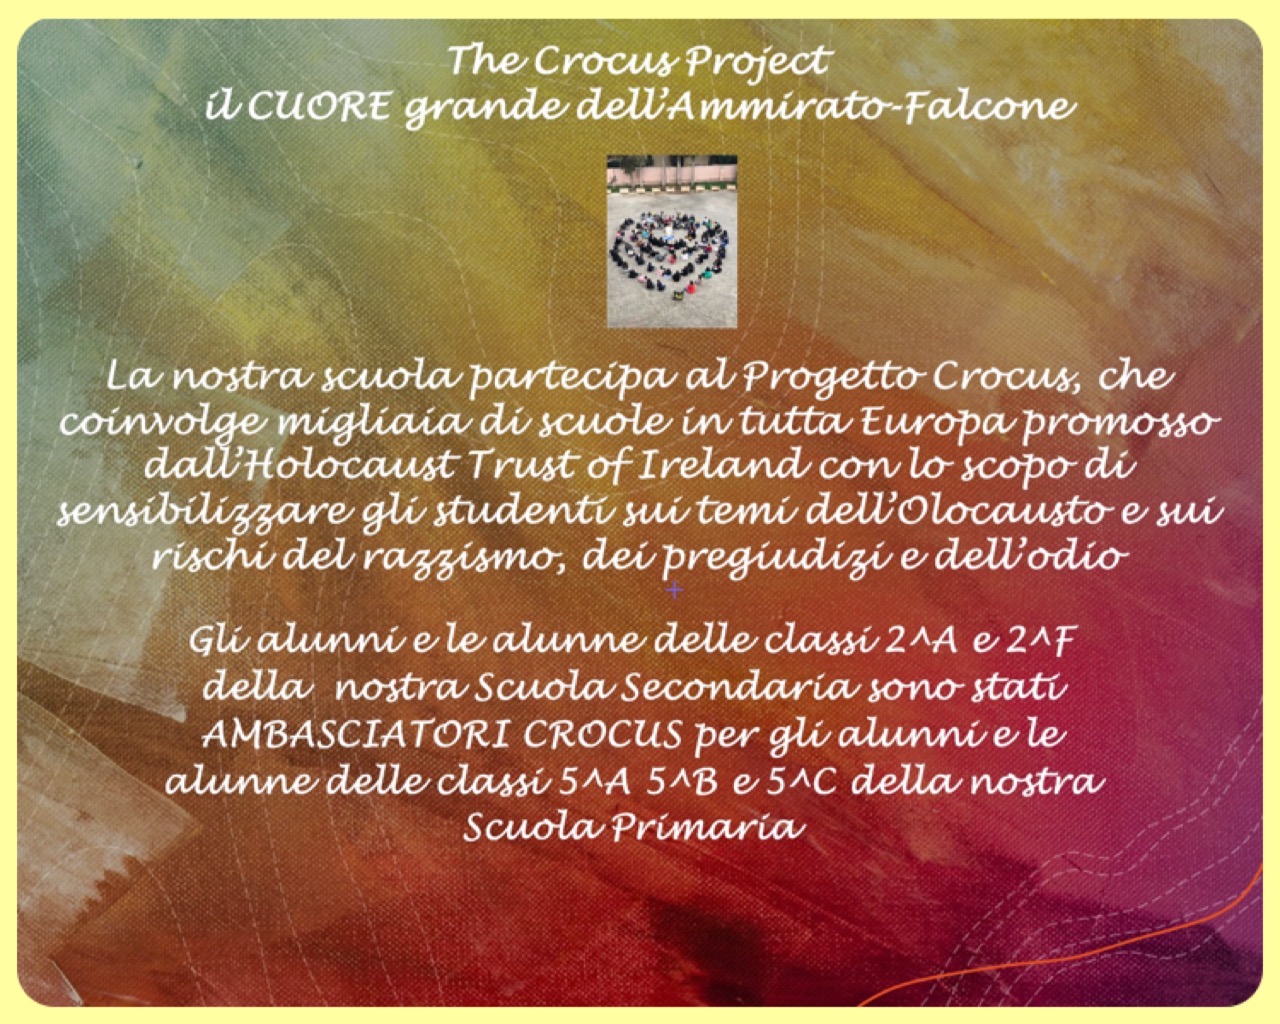 The Crocus project